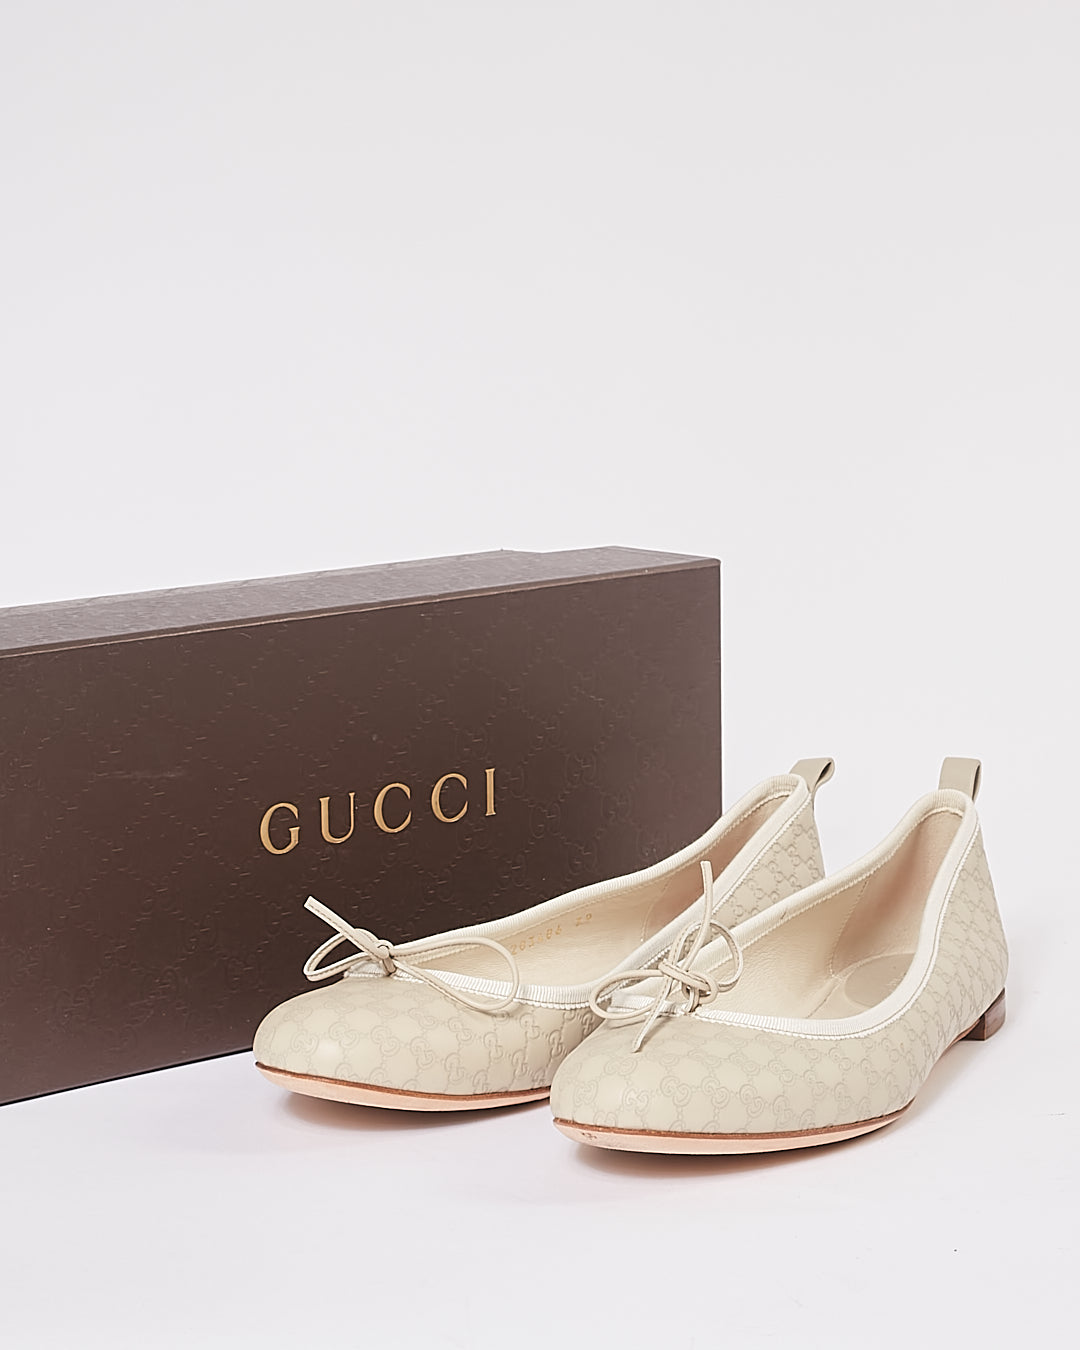 Gucci GG Leather Ballerina Flats - 39